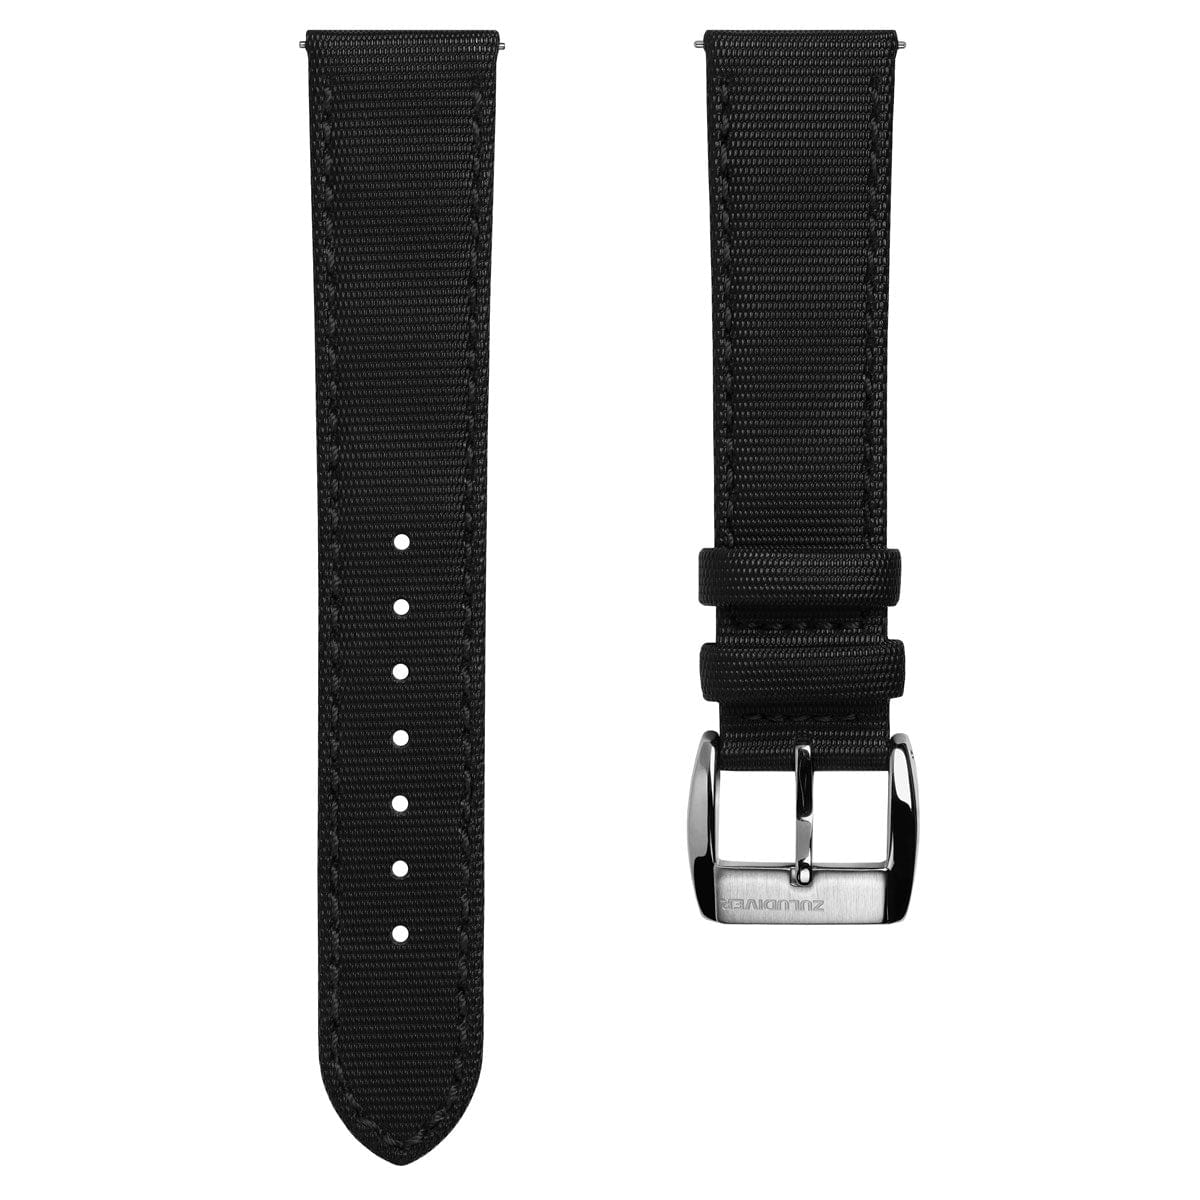 ZULUDIVER Maverick (MK II) Sailcloth Waterproof Watch Strap - Black / Black